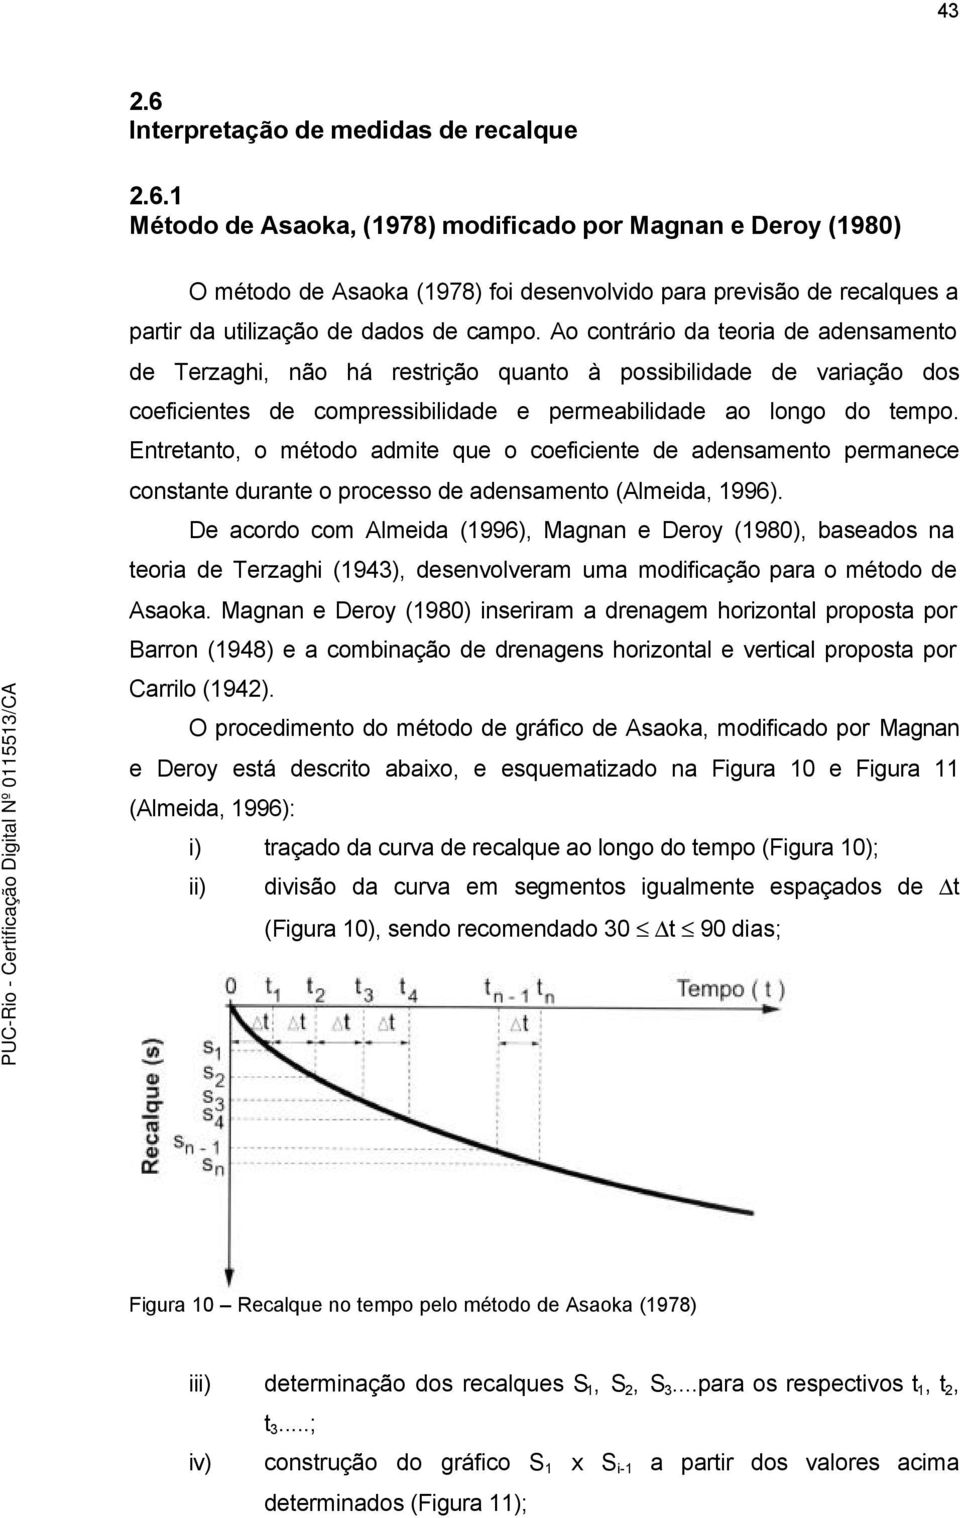 Entretanto, o método admite que o coeficiente de adensamento permanece constante durante o processo de adensamento (Almeida, 1996).